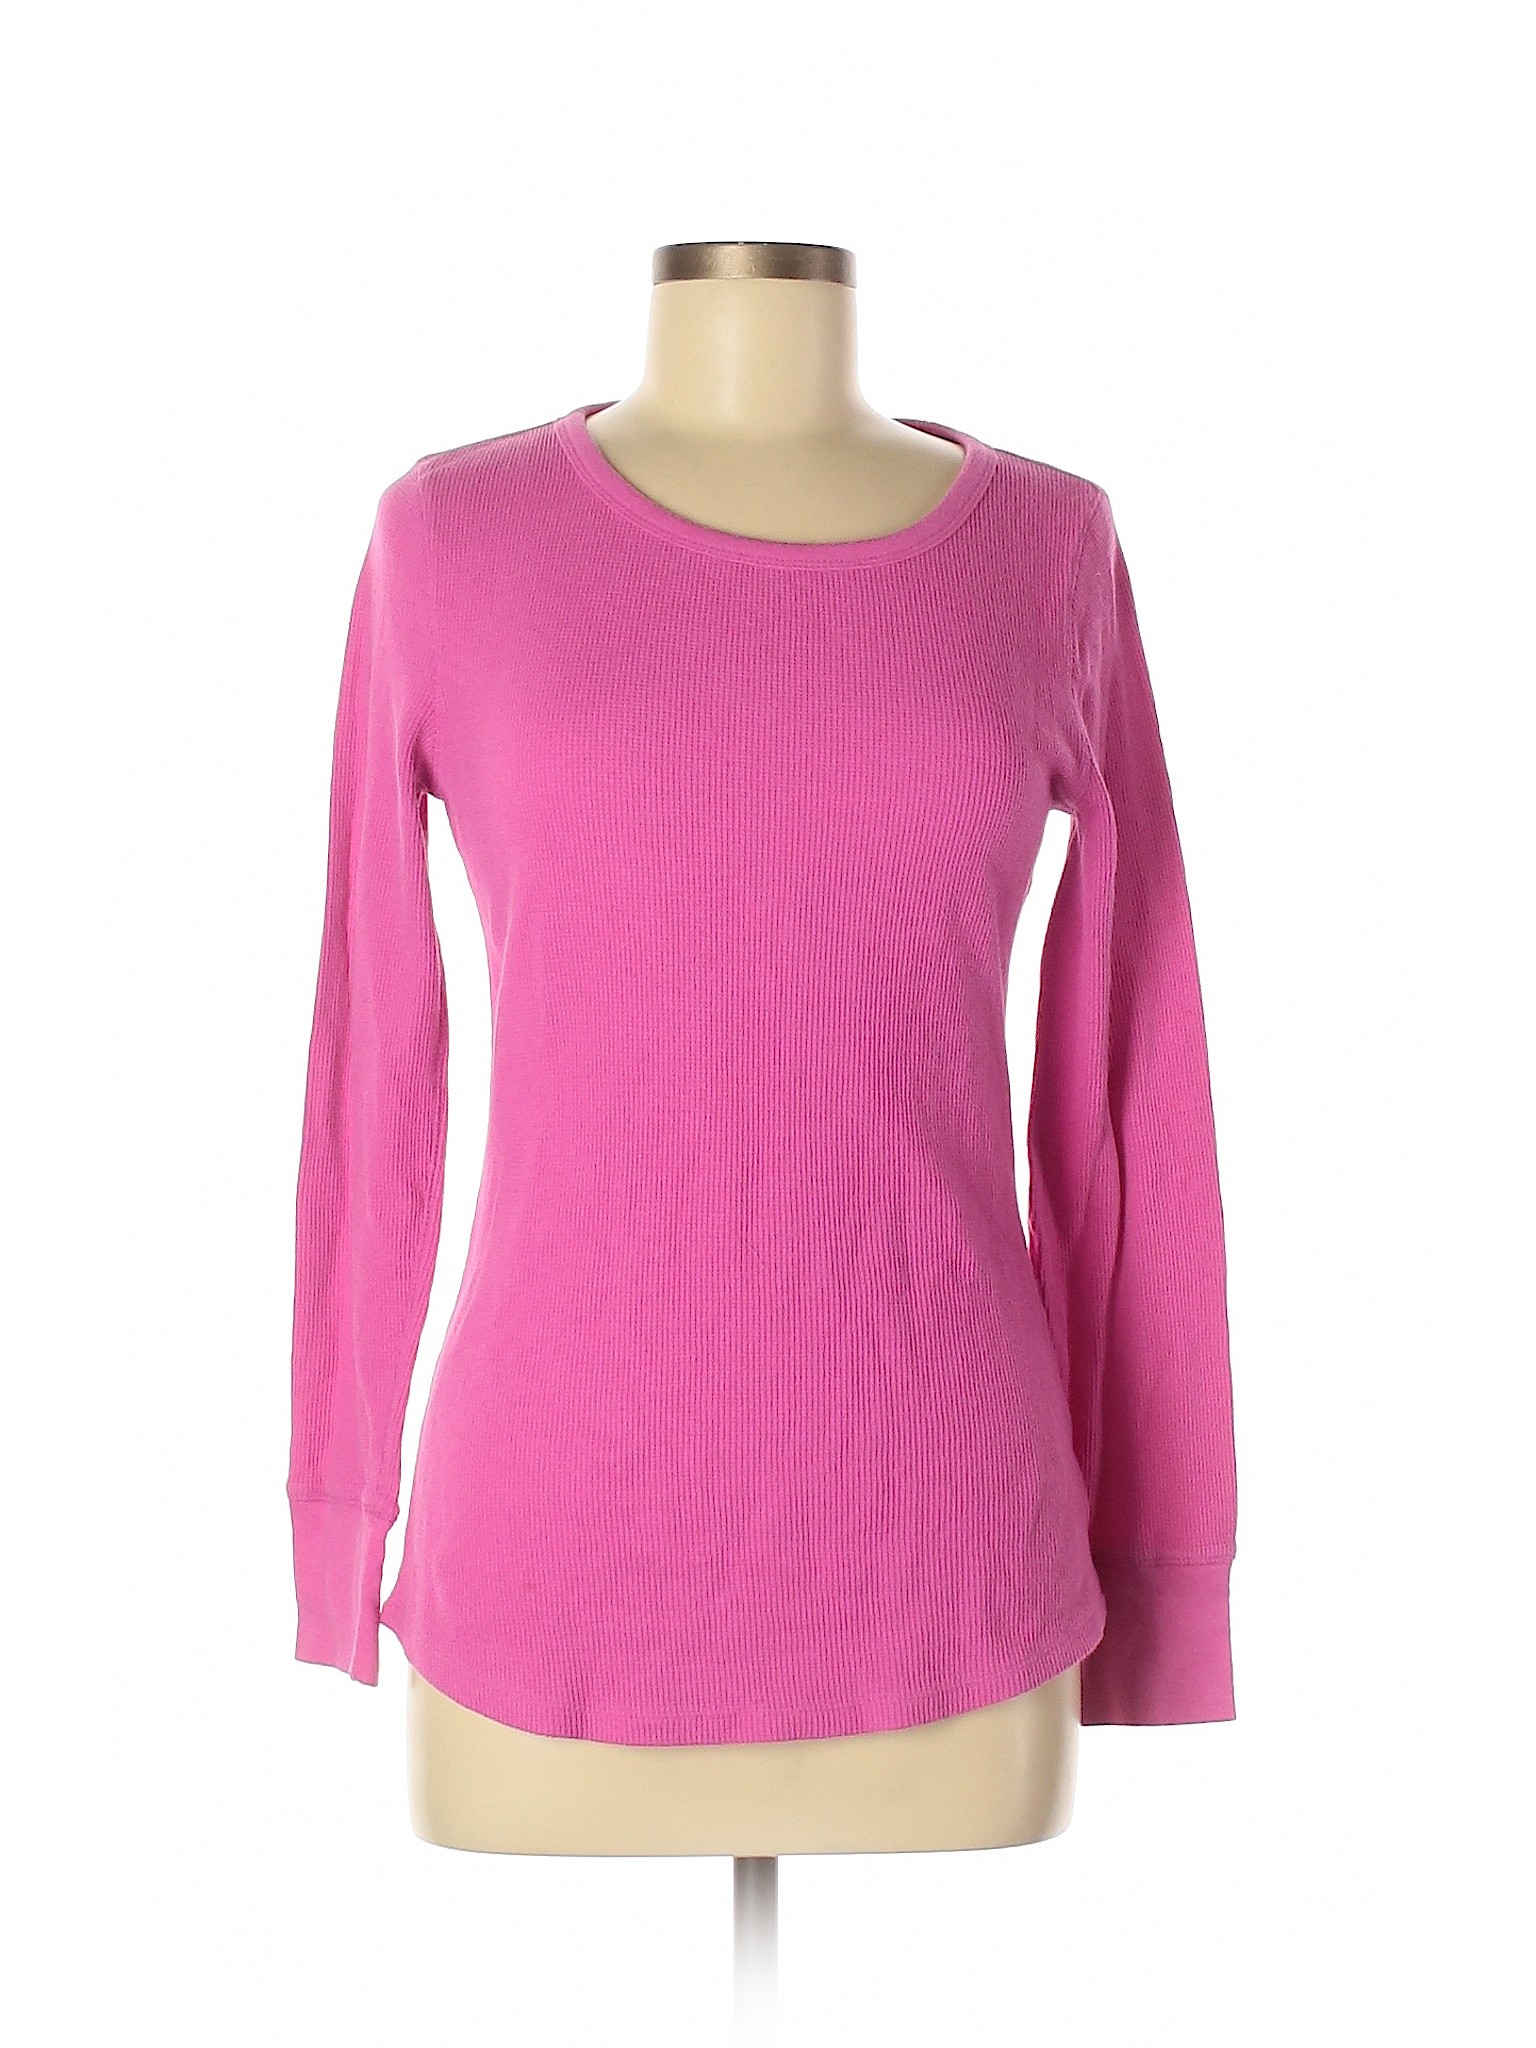 Gap Outlet Women Pink Thermal Top M | eBay